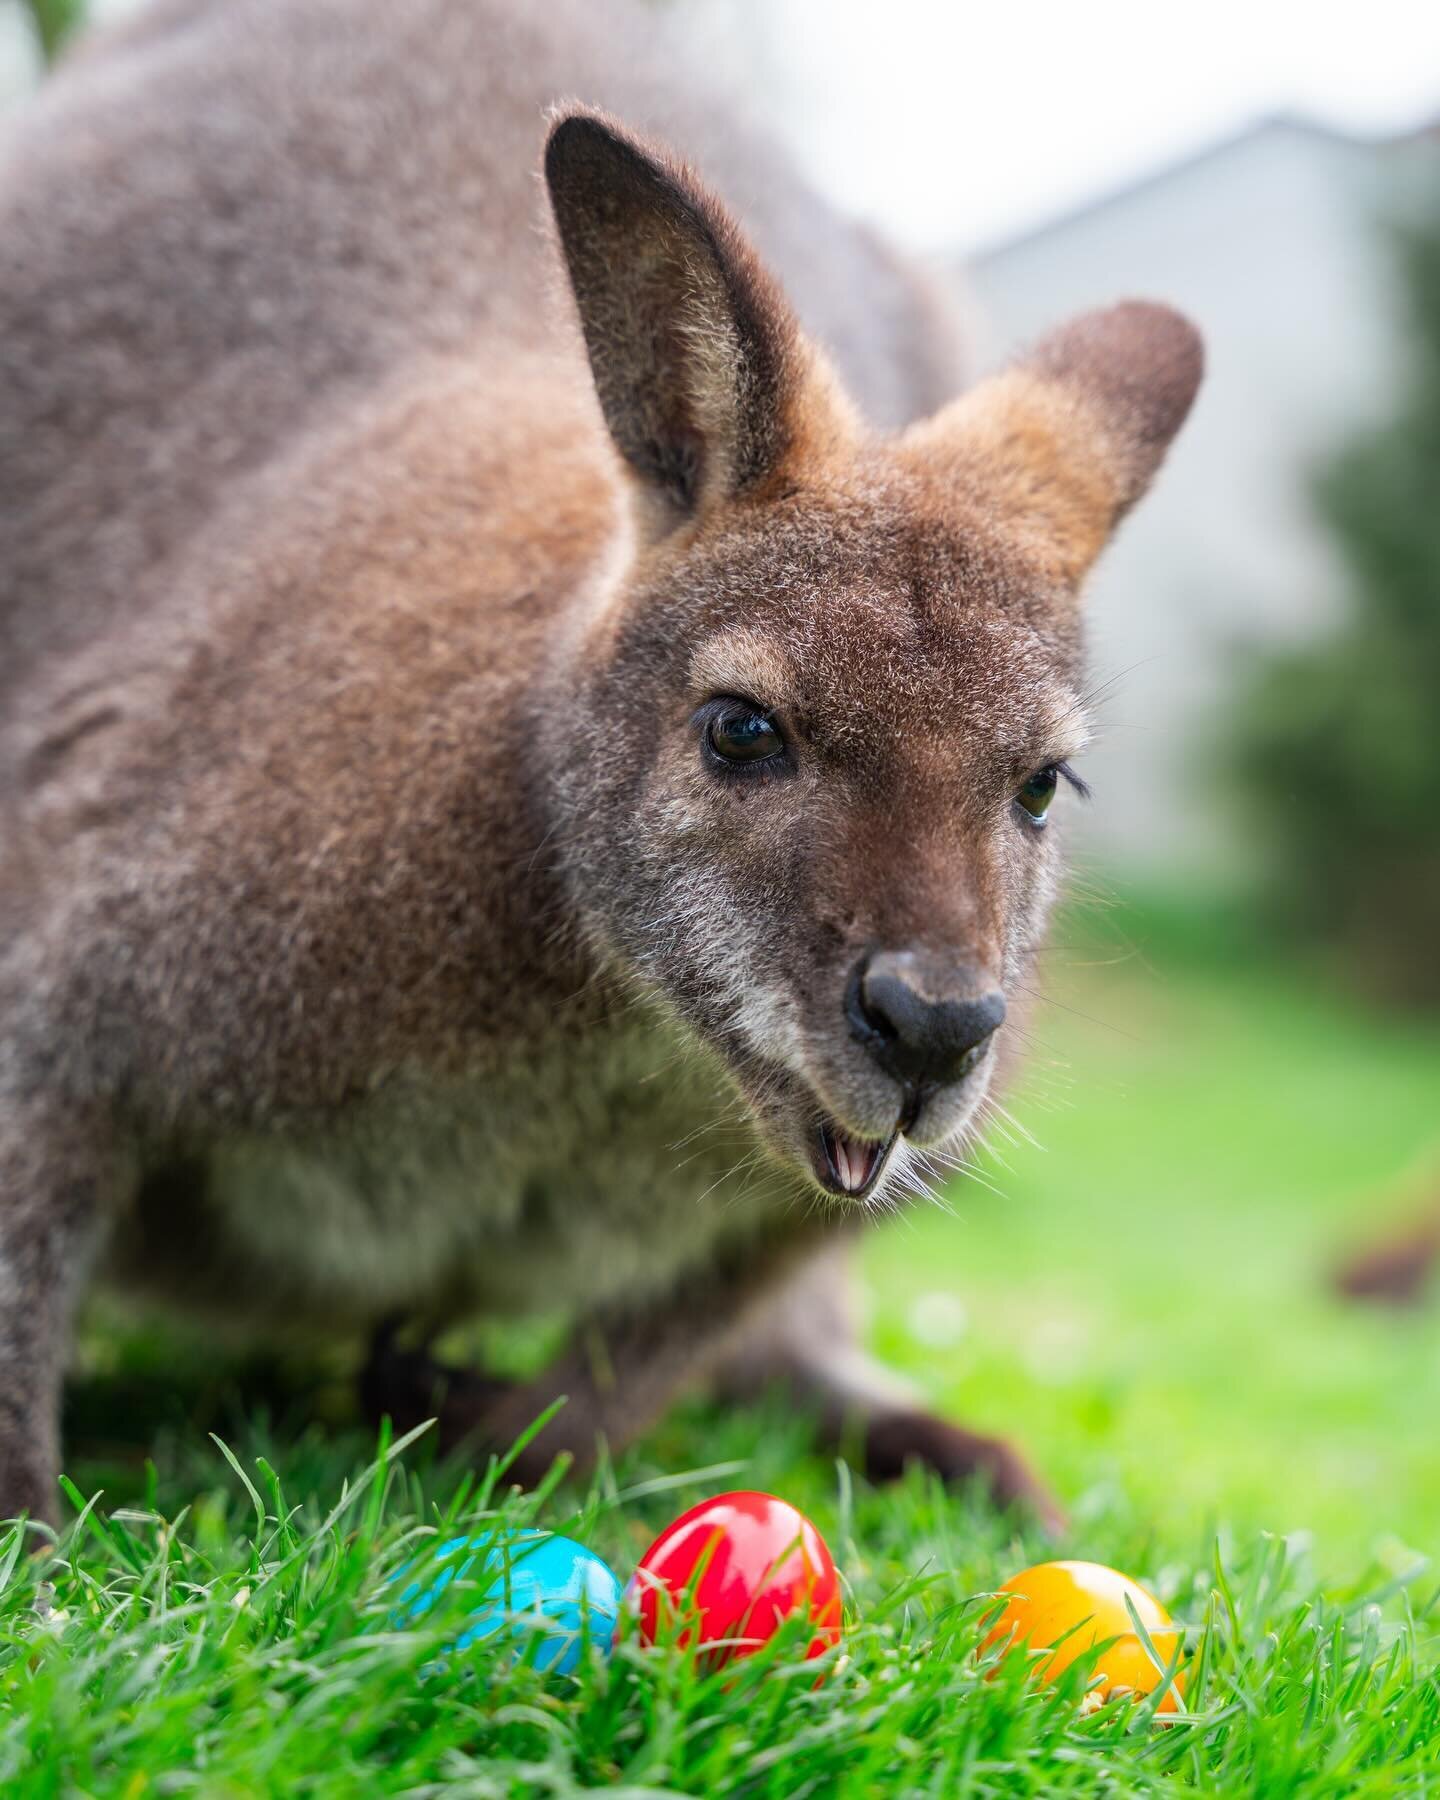 Hab den Osterhasen erwischt, war aber ein K&auml;nguru🤔
Frohe Ostern 🐰🥚🦘
.
#ostern #easter #osterhase #sony #sonyalpha7iv #&ouml;sterreich #austria #upperaustria #ober&ouml;sterreich #k&auml;nguru #k&auml;ngurus #kangaroo #australia #petphotograp